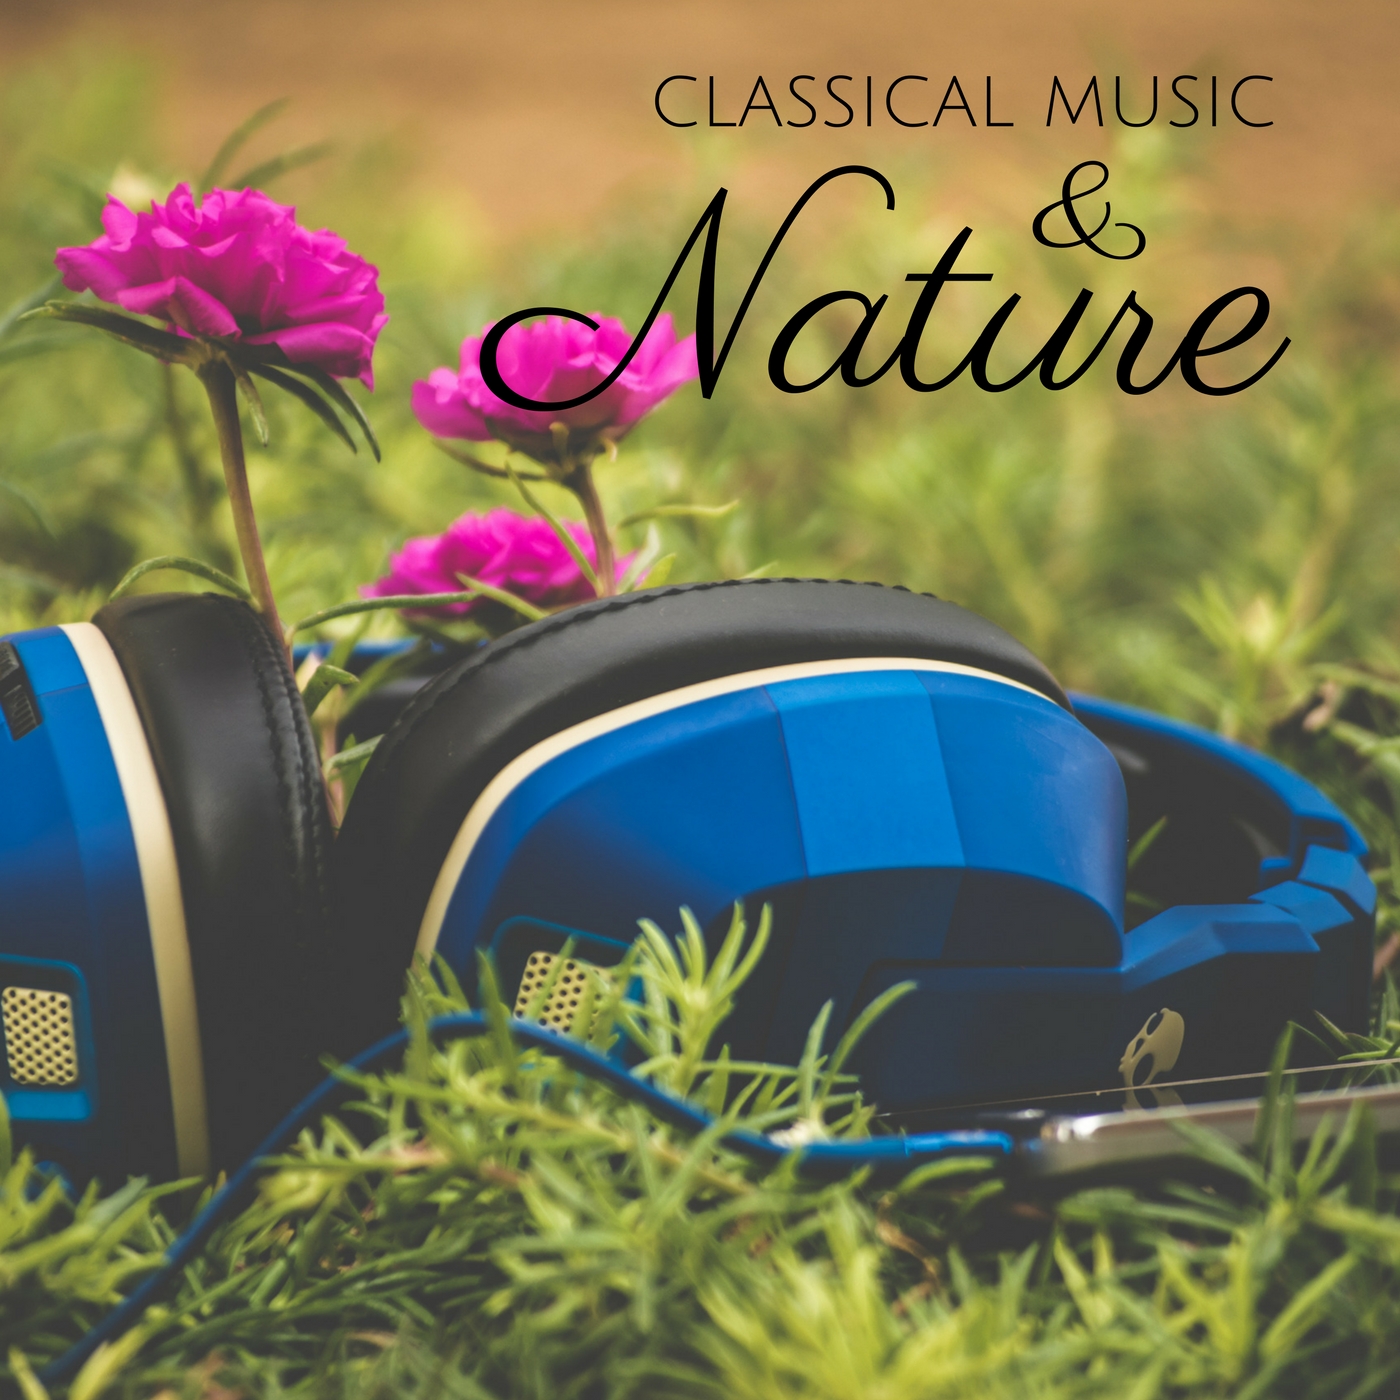 Classical Music & Nature